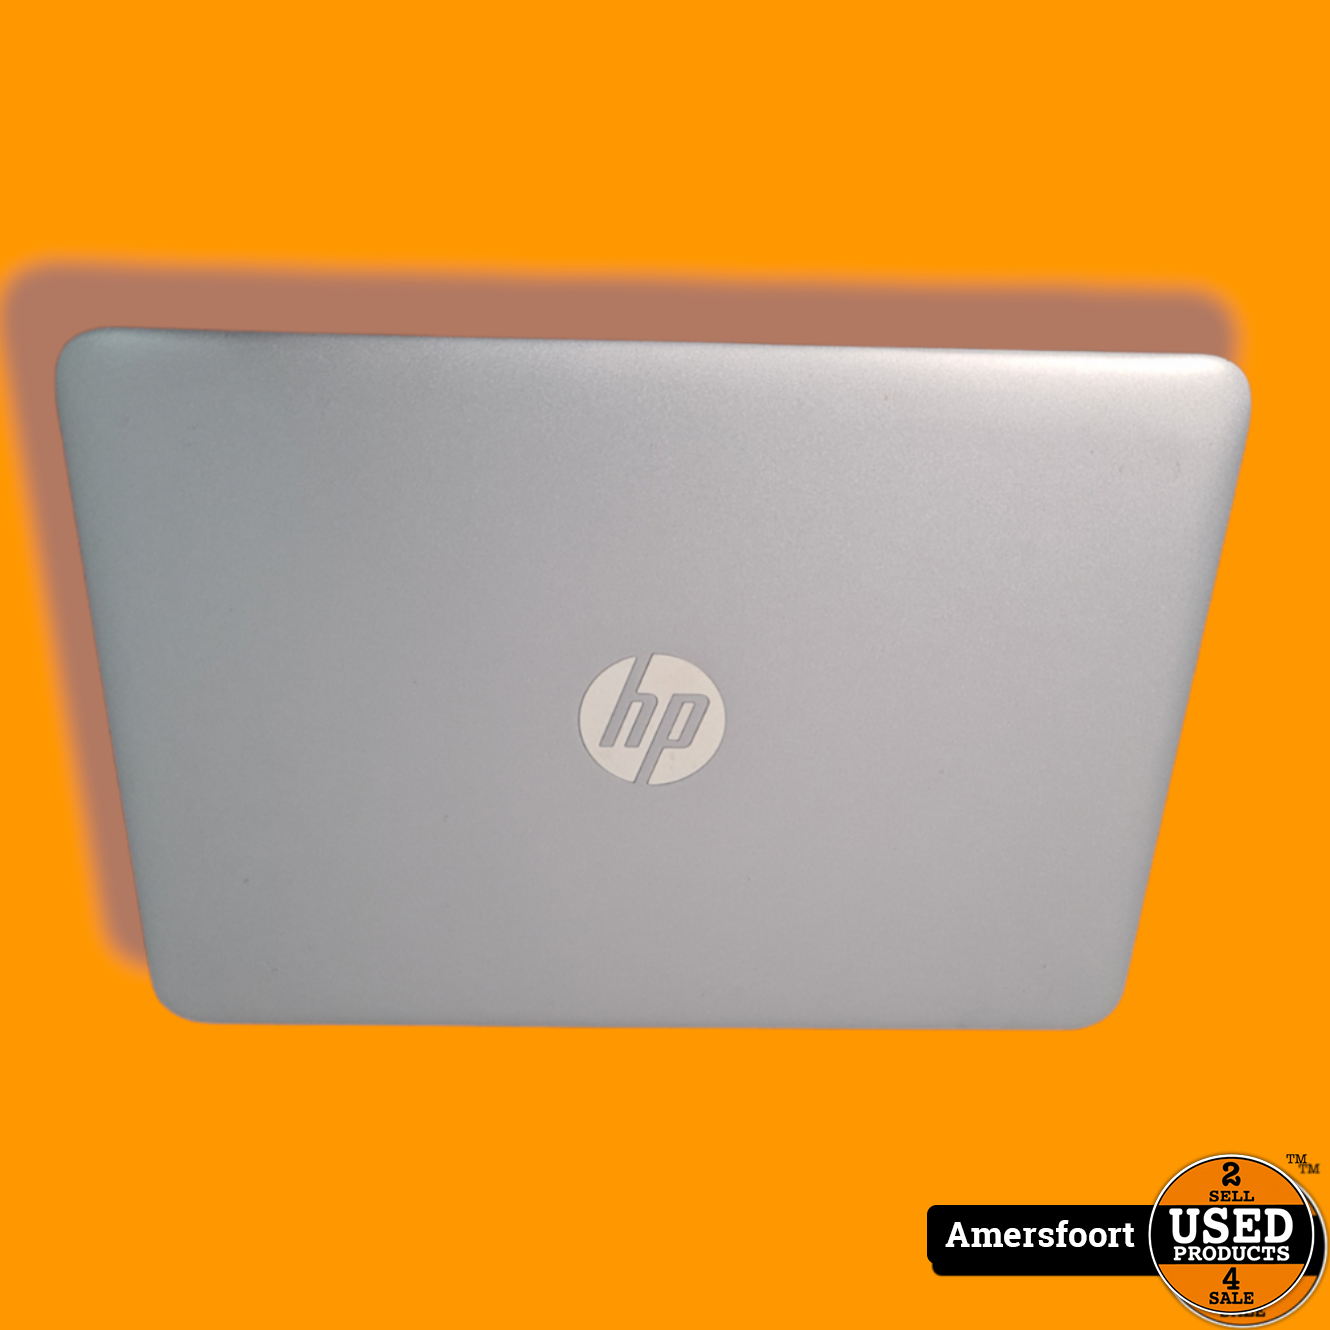 na school droefheid lavendel HP Elitebook 820 G3 | i5 | 8GB | SSD | Windows 10 Laptop - Used Products  Amersfoort